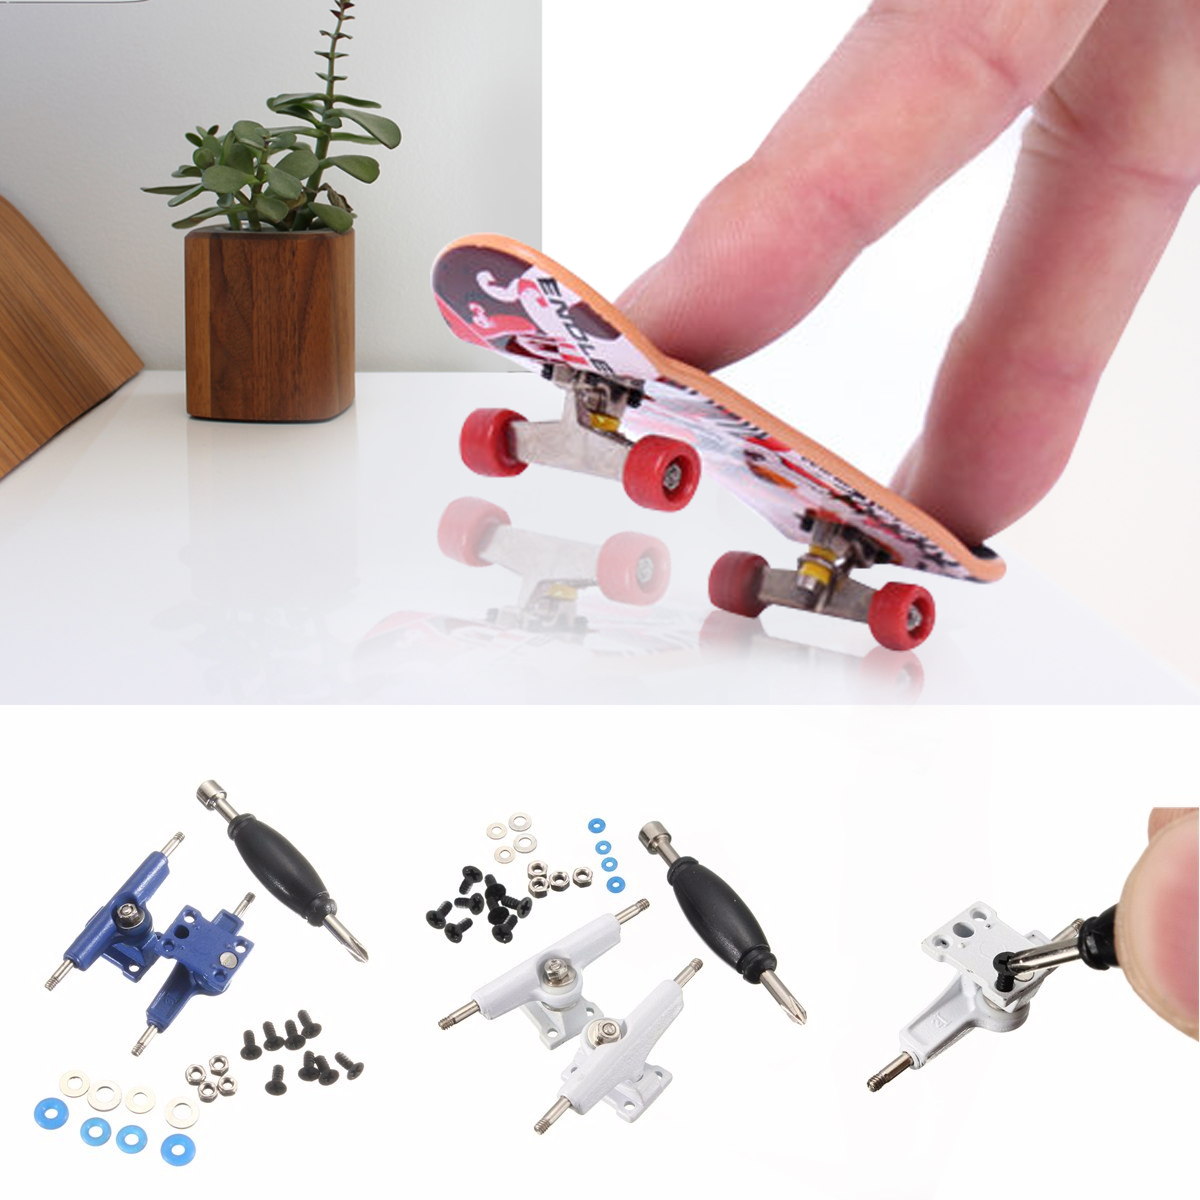 Fingerboard-Truck-Skateboard-Trucks-DIY-32MM-Tool-Kit-Screws-Wheel-Nuts-Gift-1619483